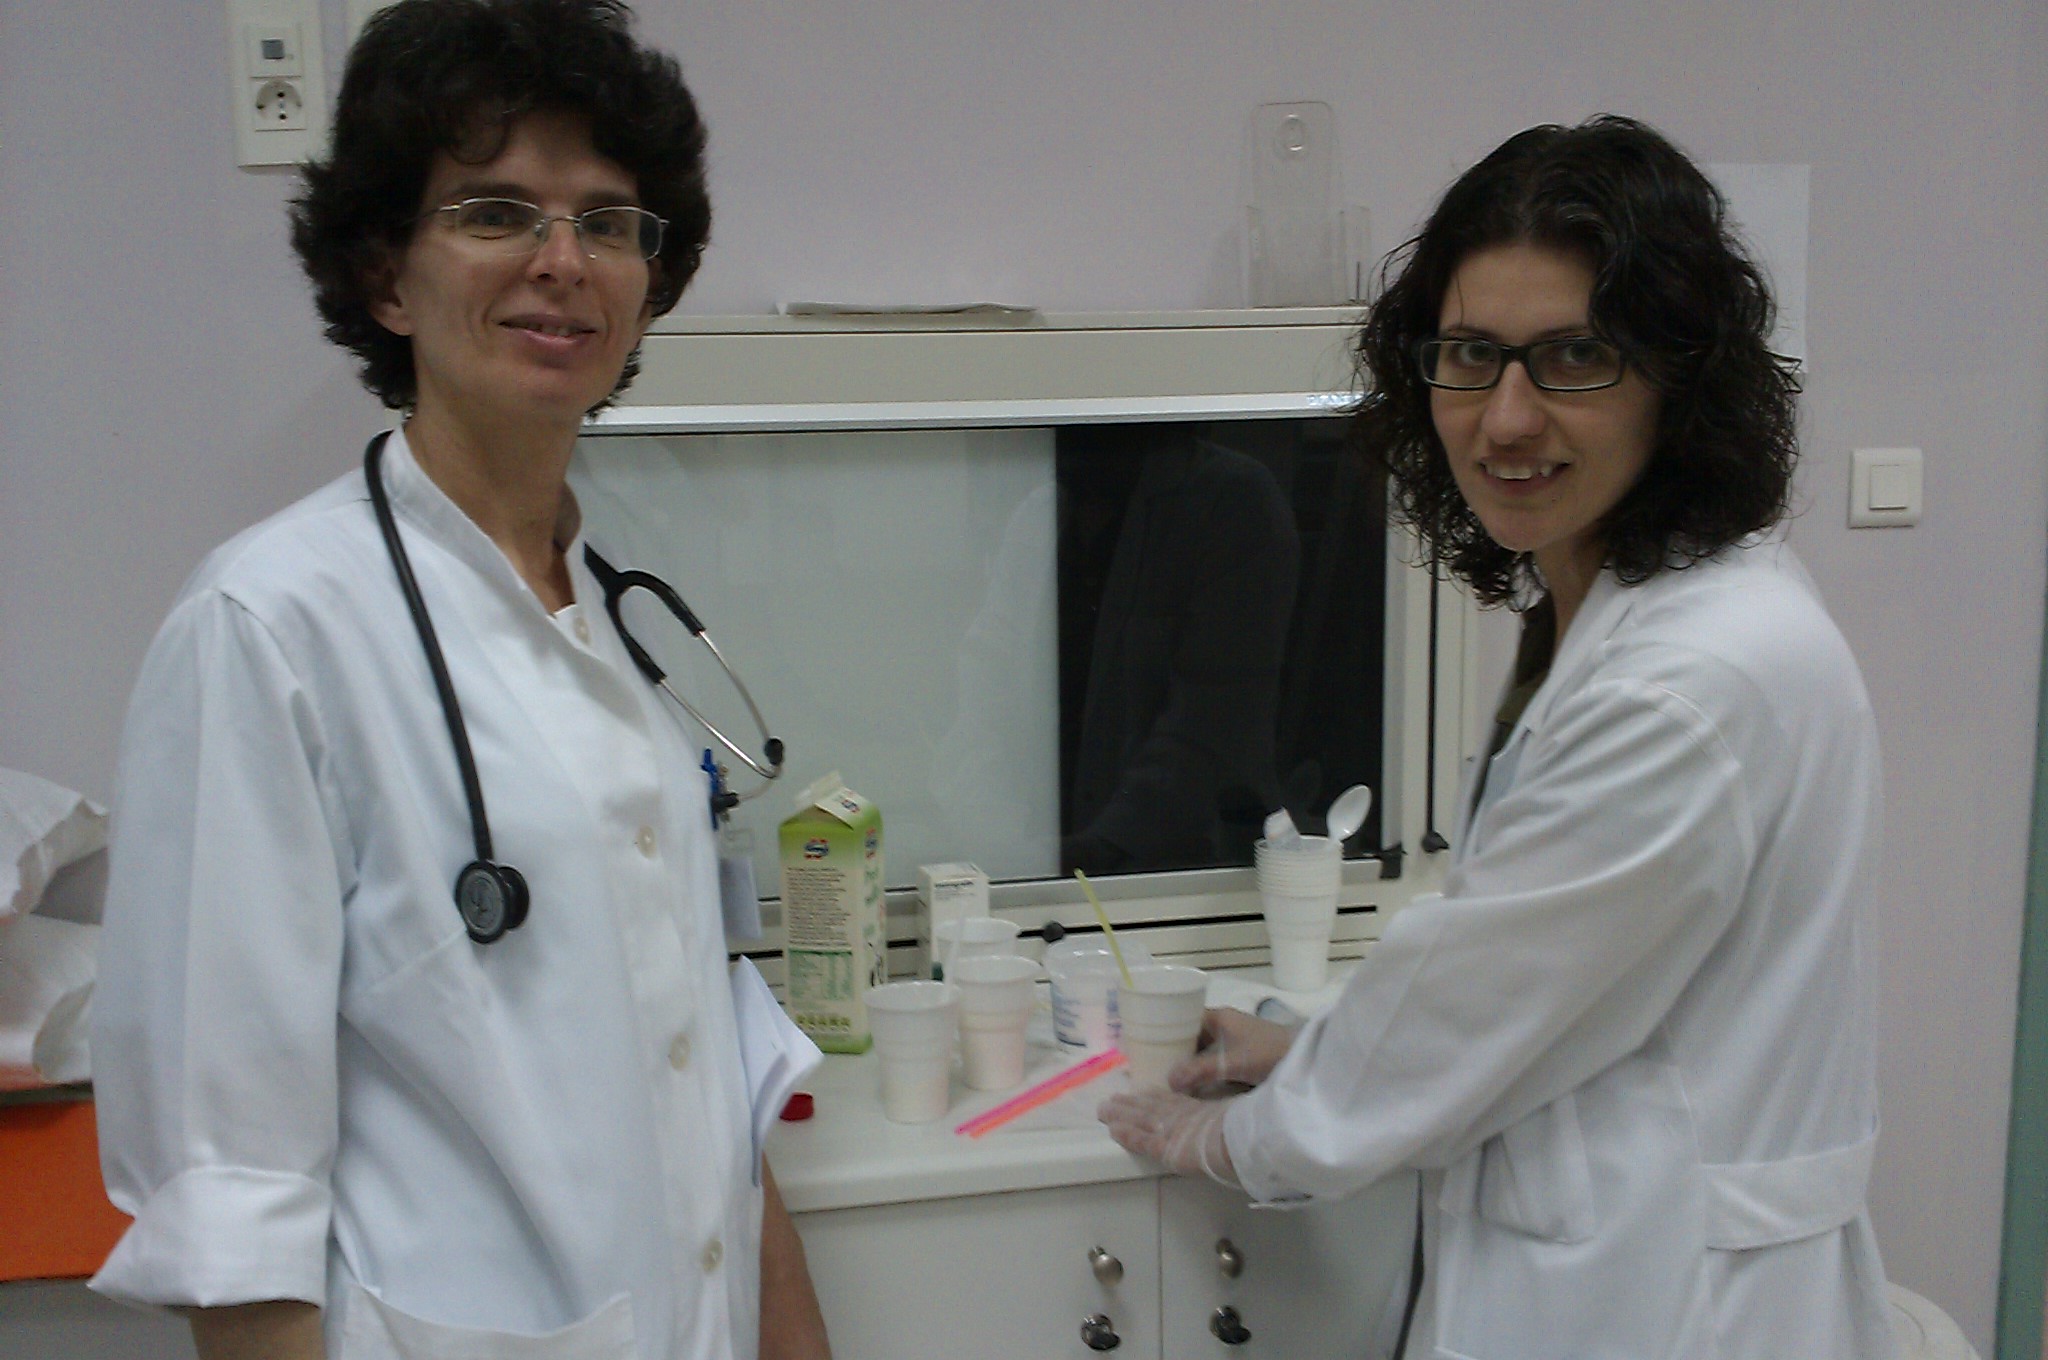 Drs. Markaki and Malandraki at the Radiology Department of Evangelismos Hospital